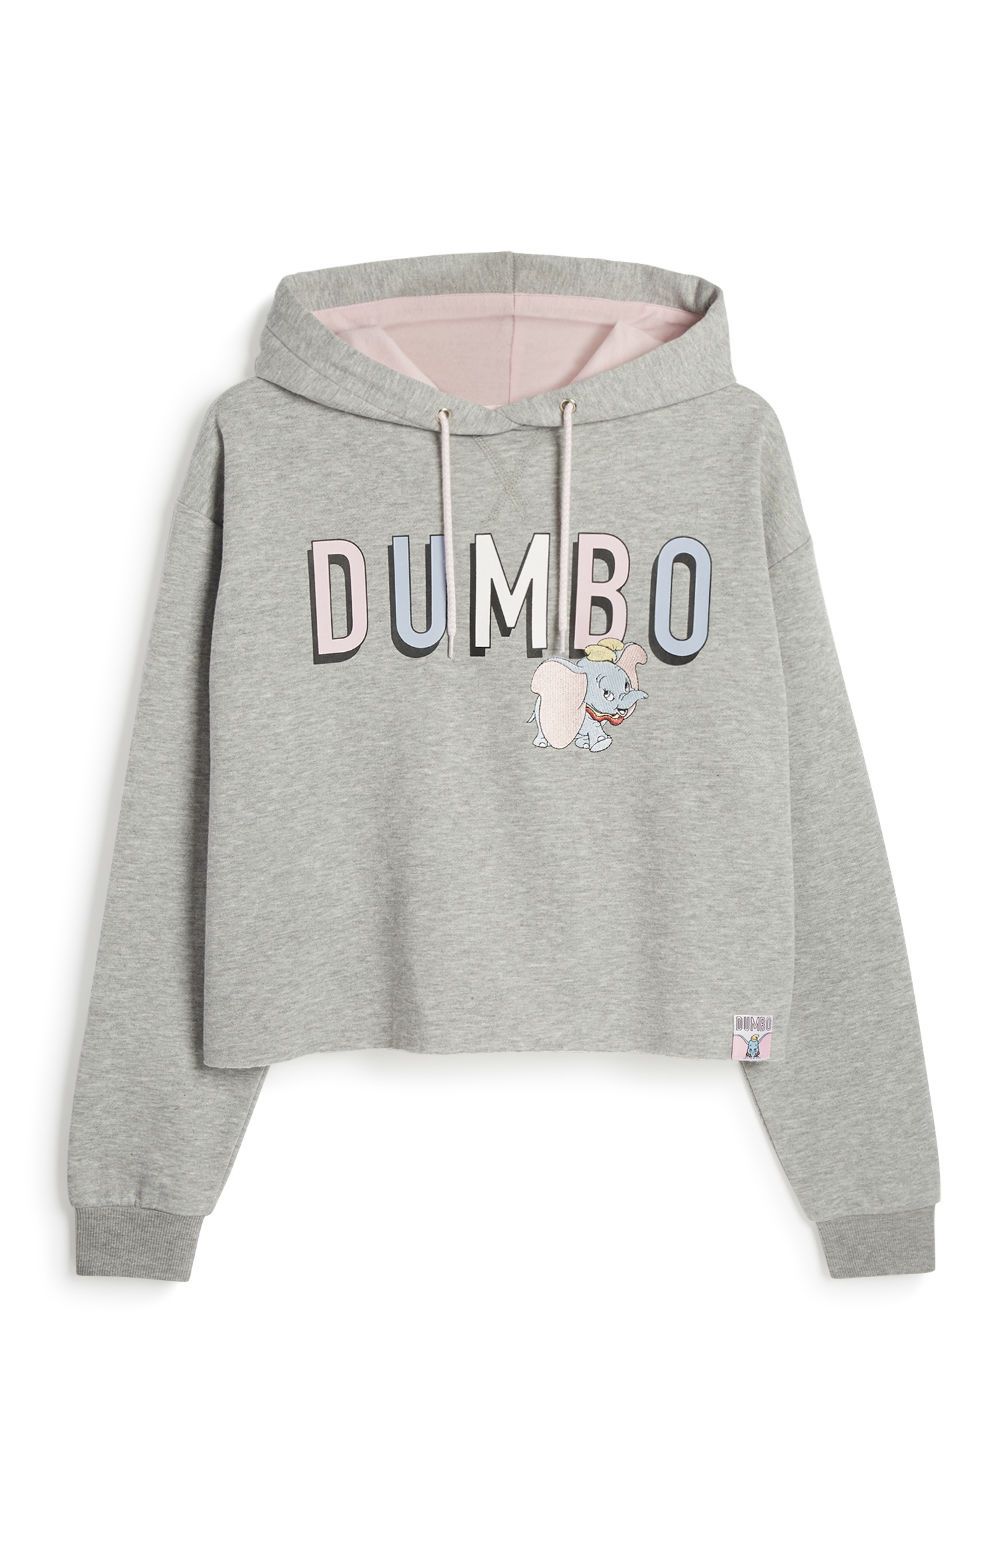 Sudadera de Dumbo para Primark